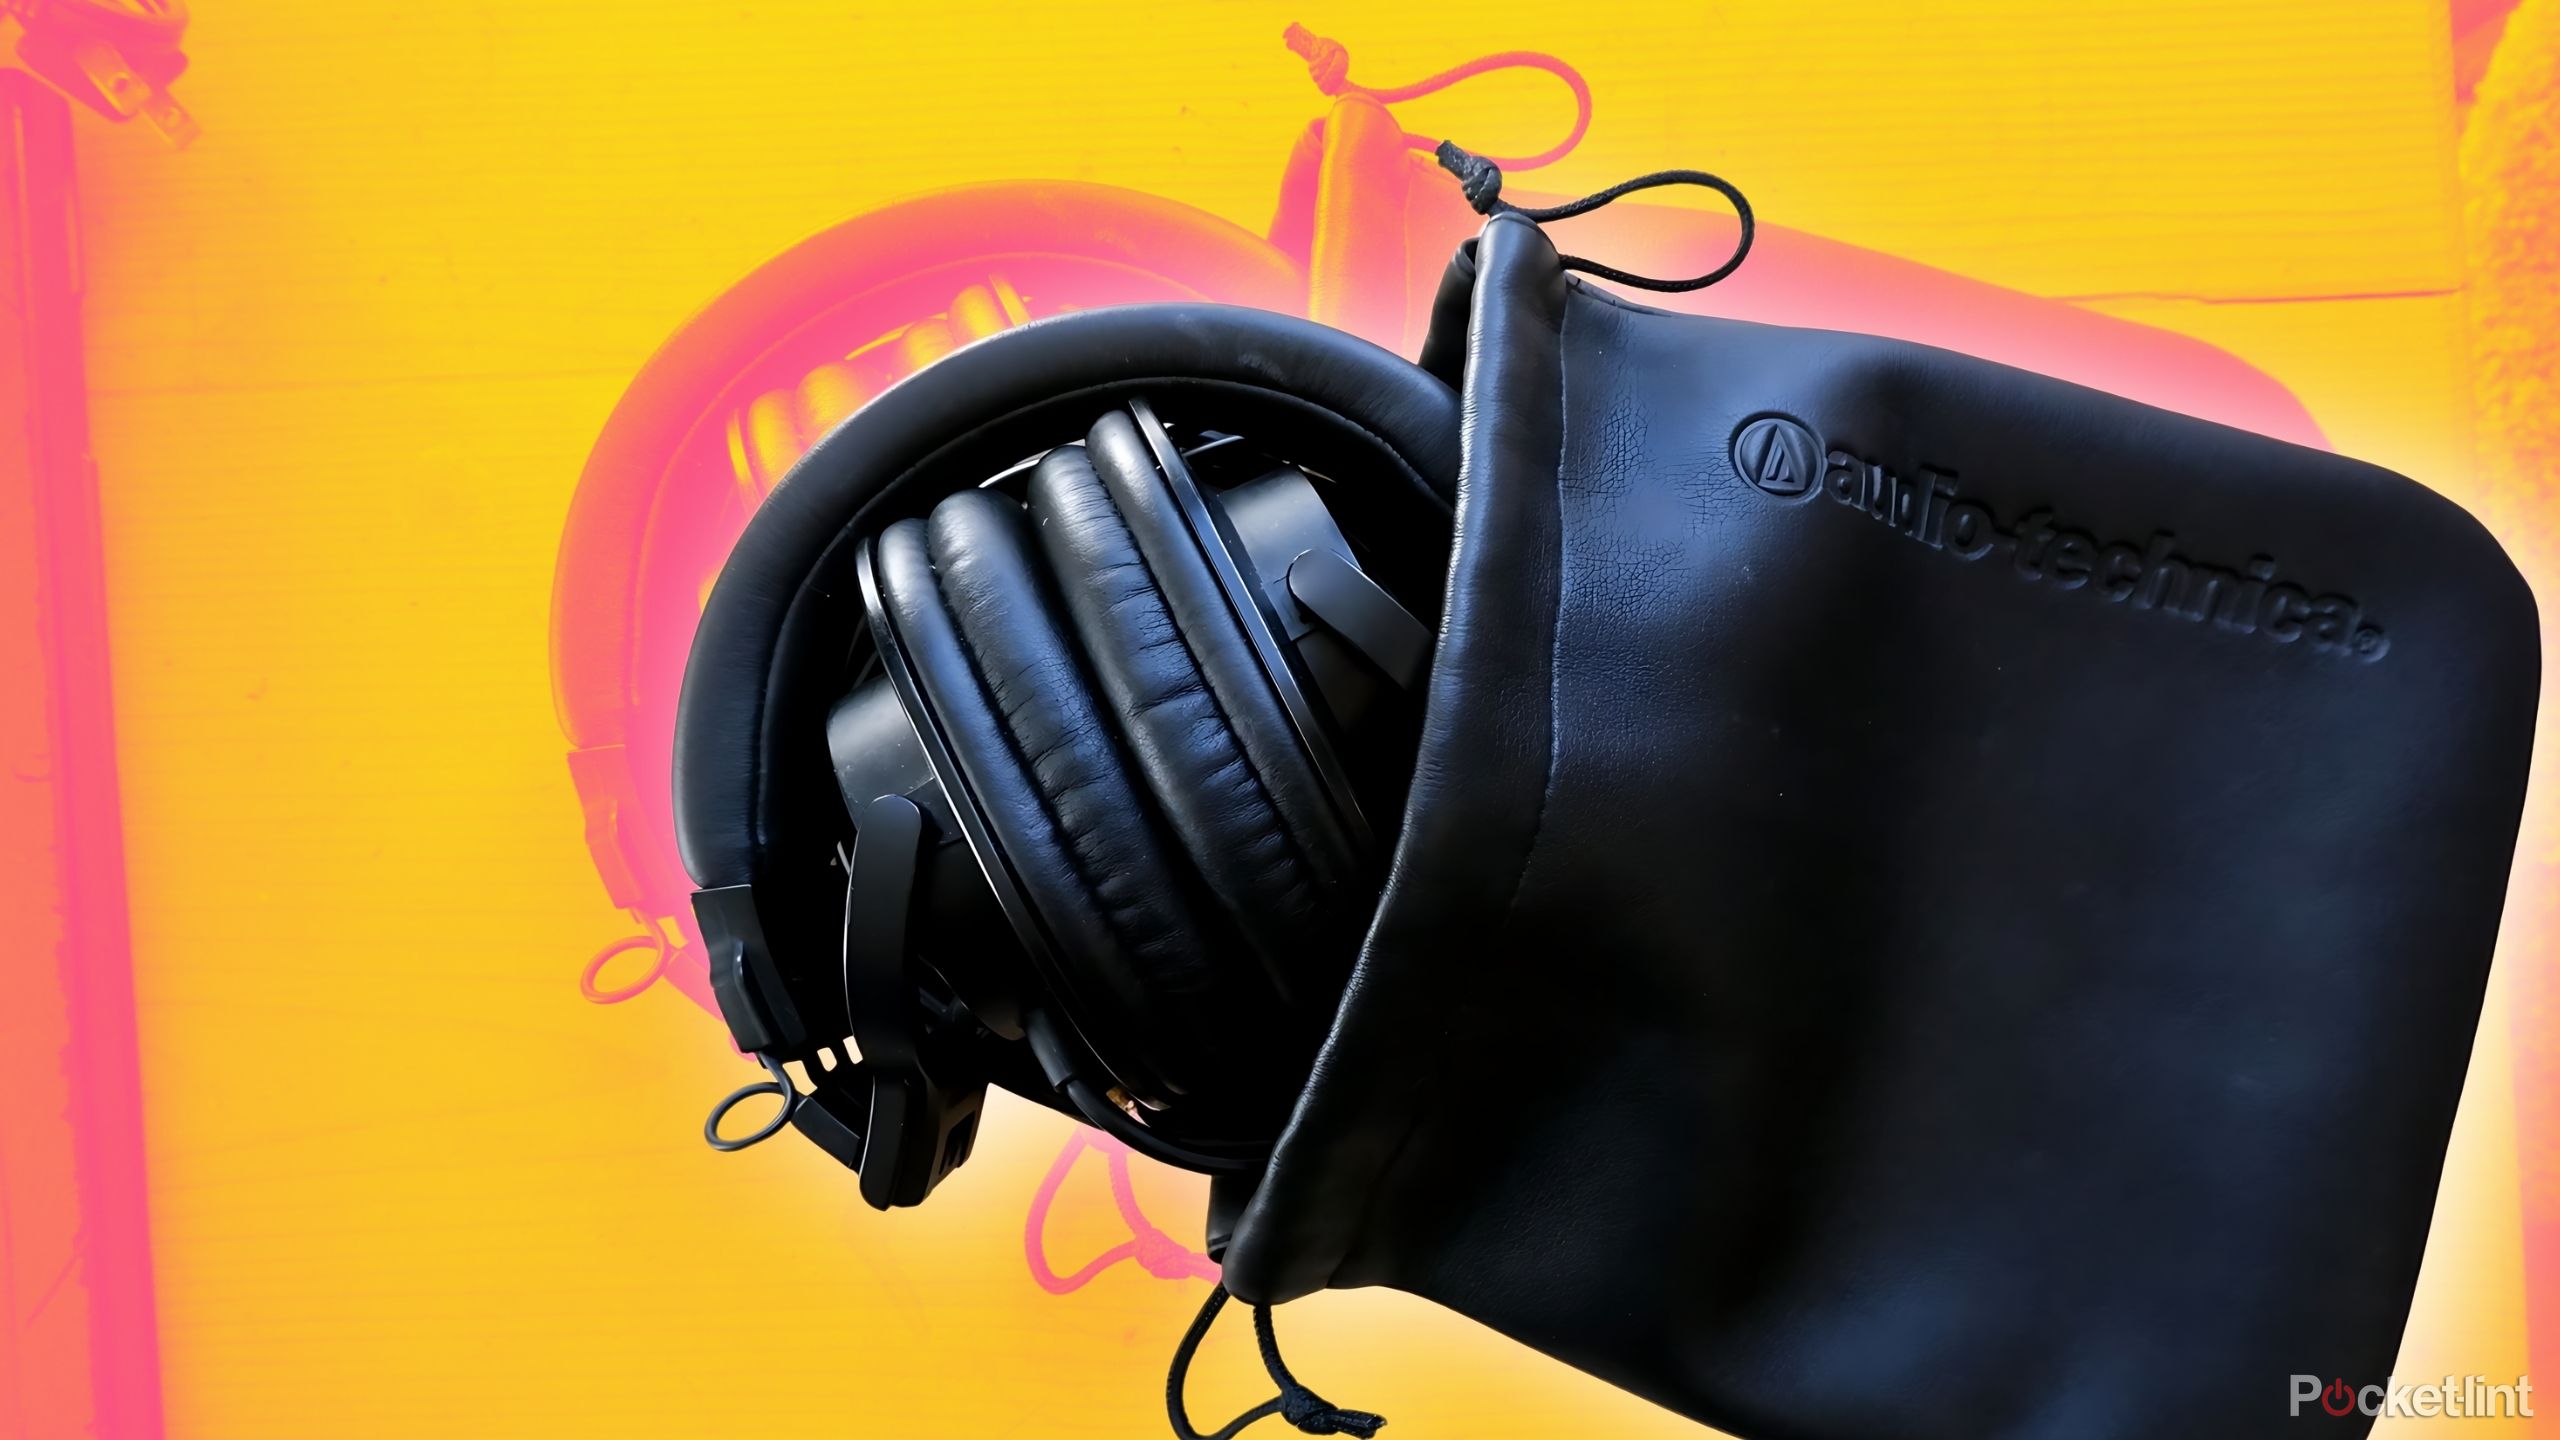 Reasons to buy Audio-Technica headphones over Sony studio headphones